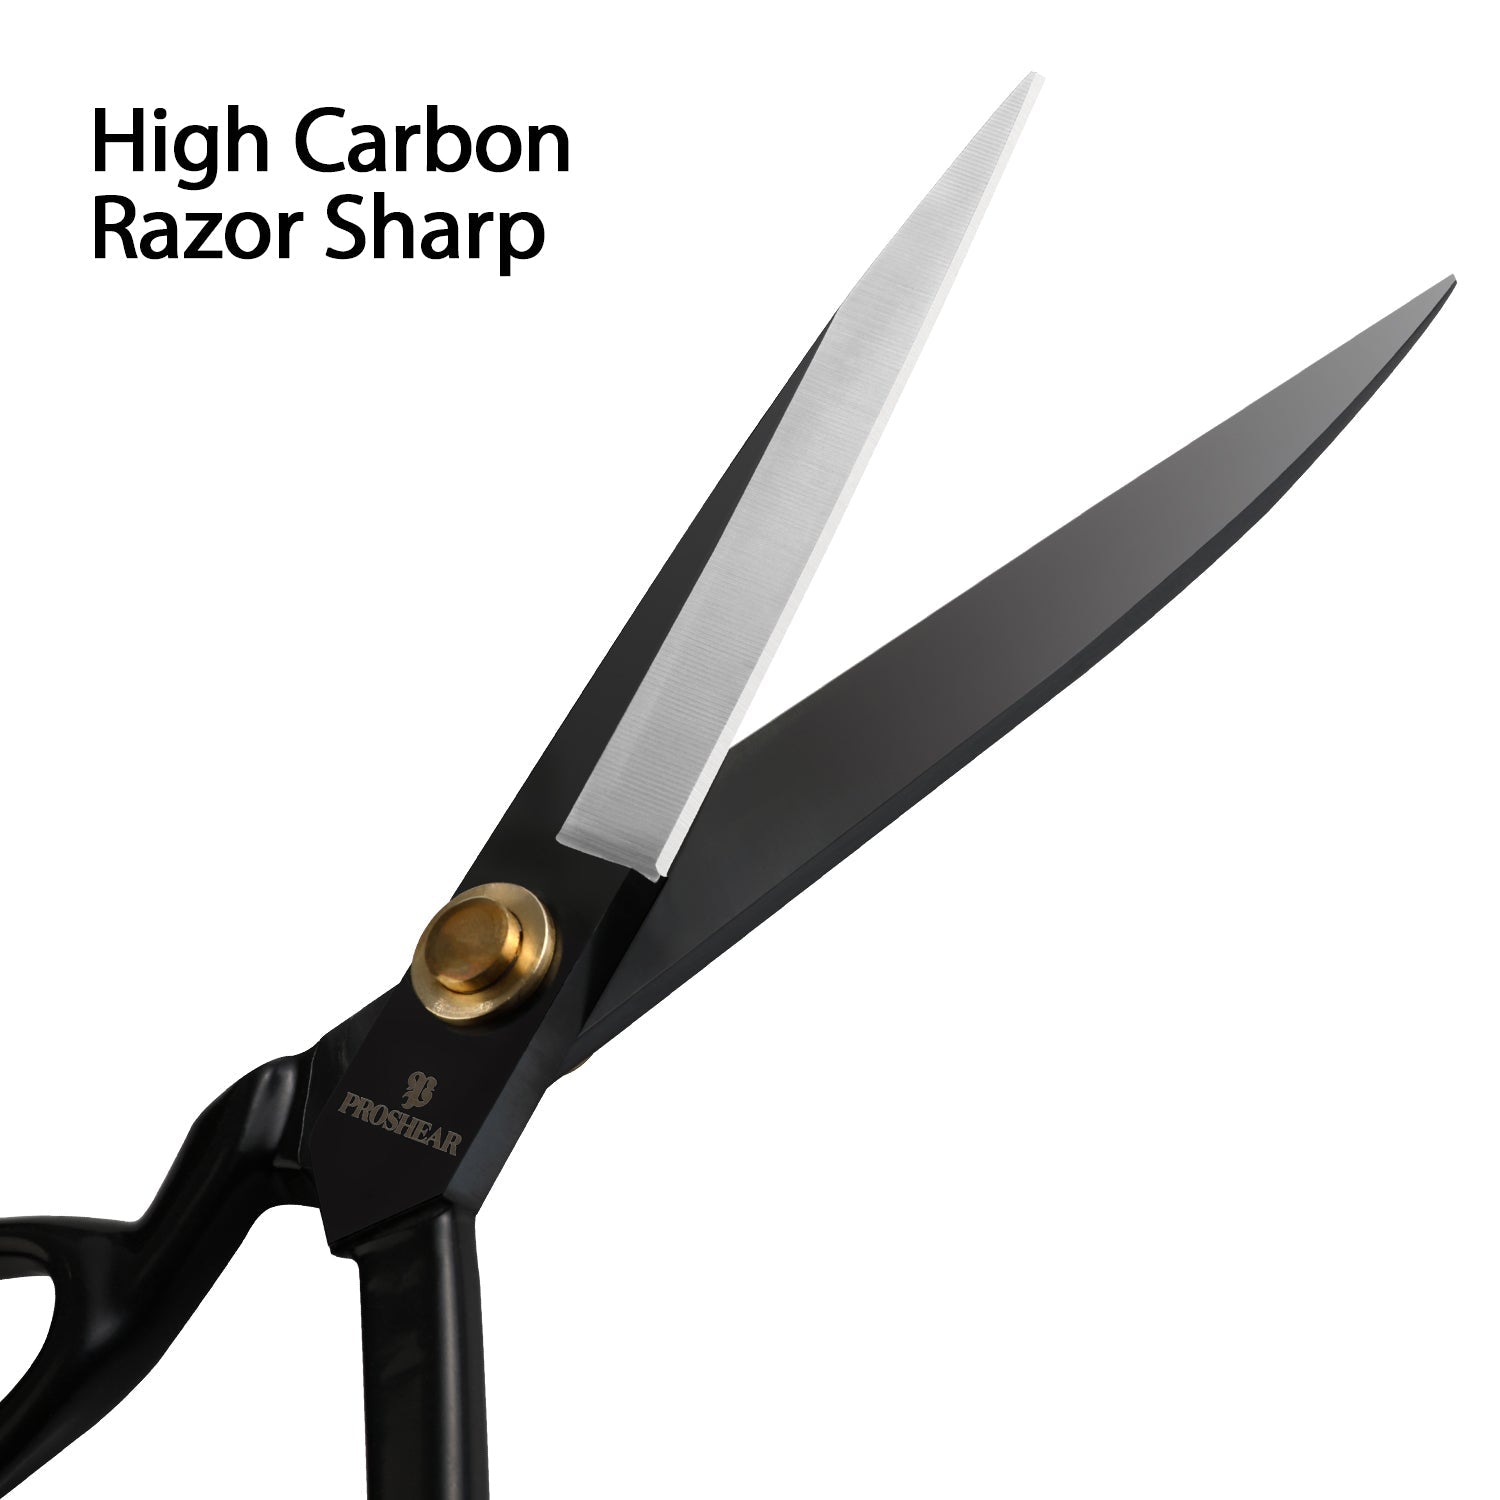 SINGER Heavy Duty Fabric Scissors, 9.5” Dressmaker Shears with Comfort Grip  Handles by Singer | Joann x Ribblr